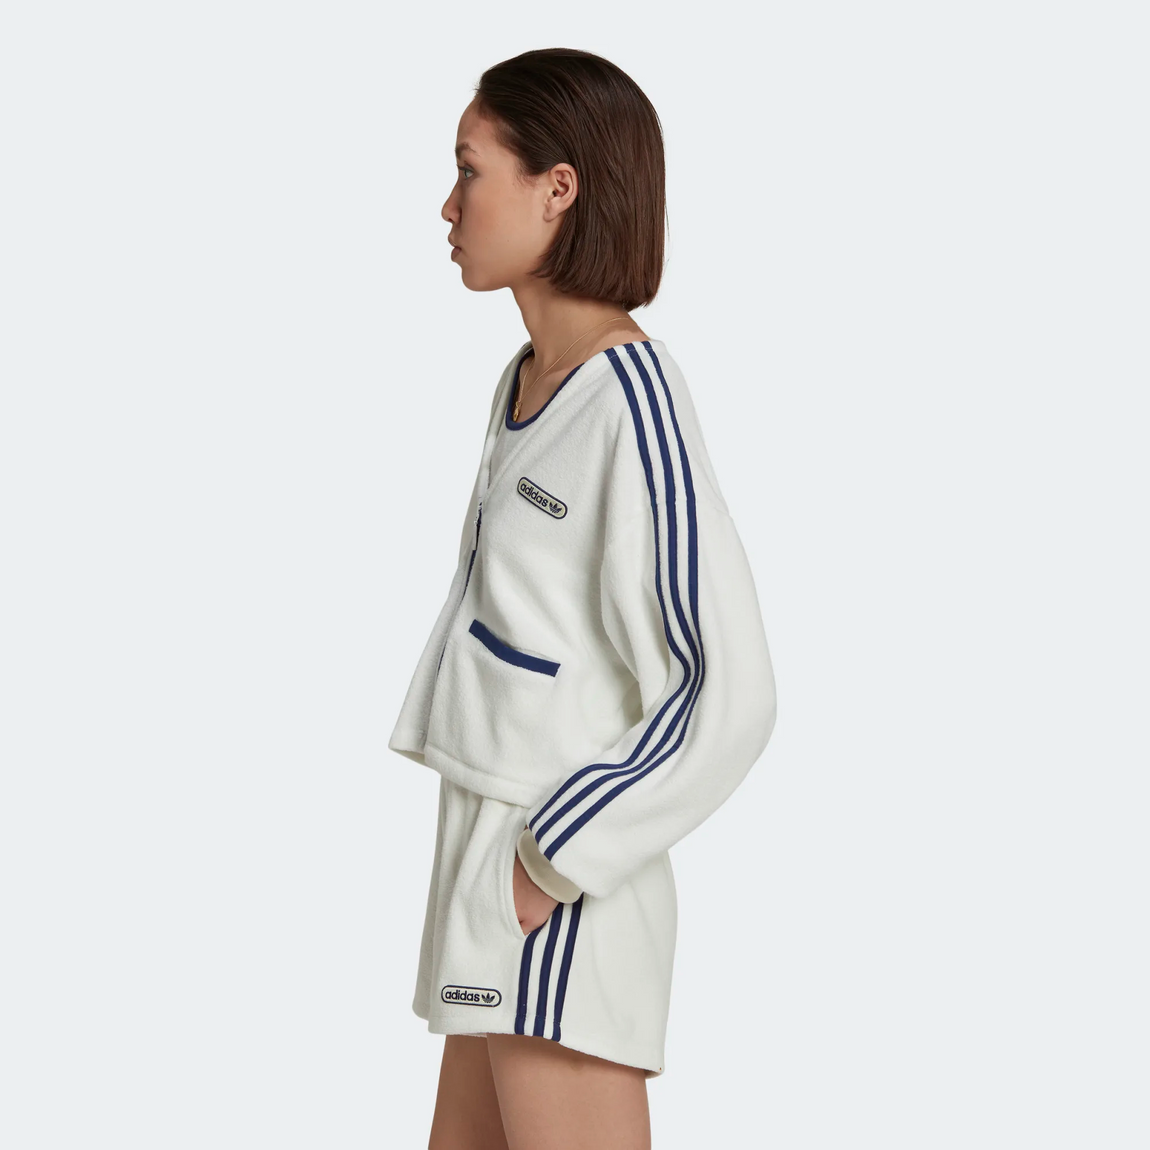 Adidas Women's Crop Towel Terry Cardigan (Non Dyed) - Adidas Women's Crop Towel Terry Cardigan (Non Dyed) - 